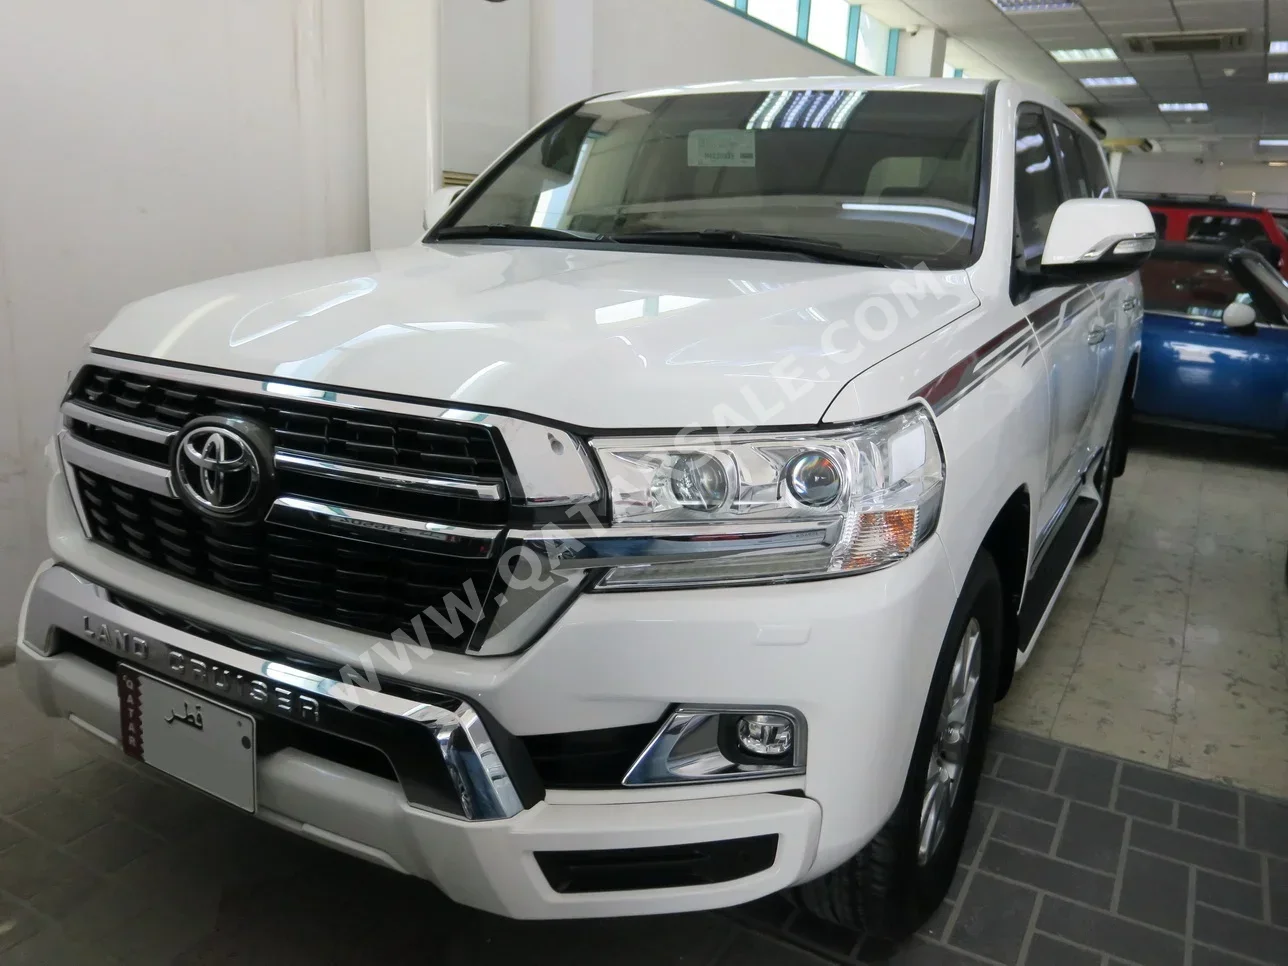 Toyota  Land Cruiser  GXR  2021  Automatic  90,000 Km  8 Cylinder  Four Wheel Drive (4WD)  SUV  White